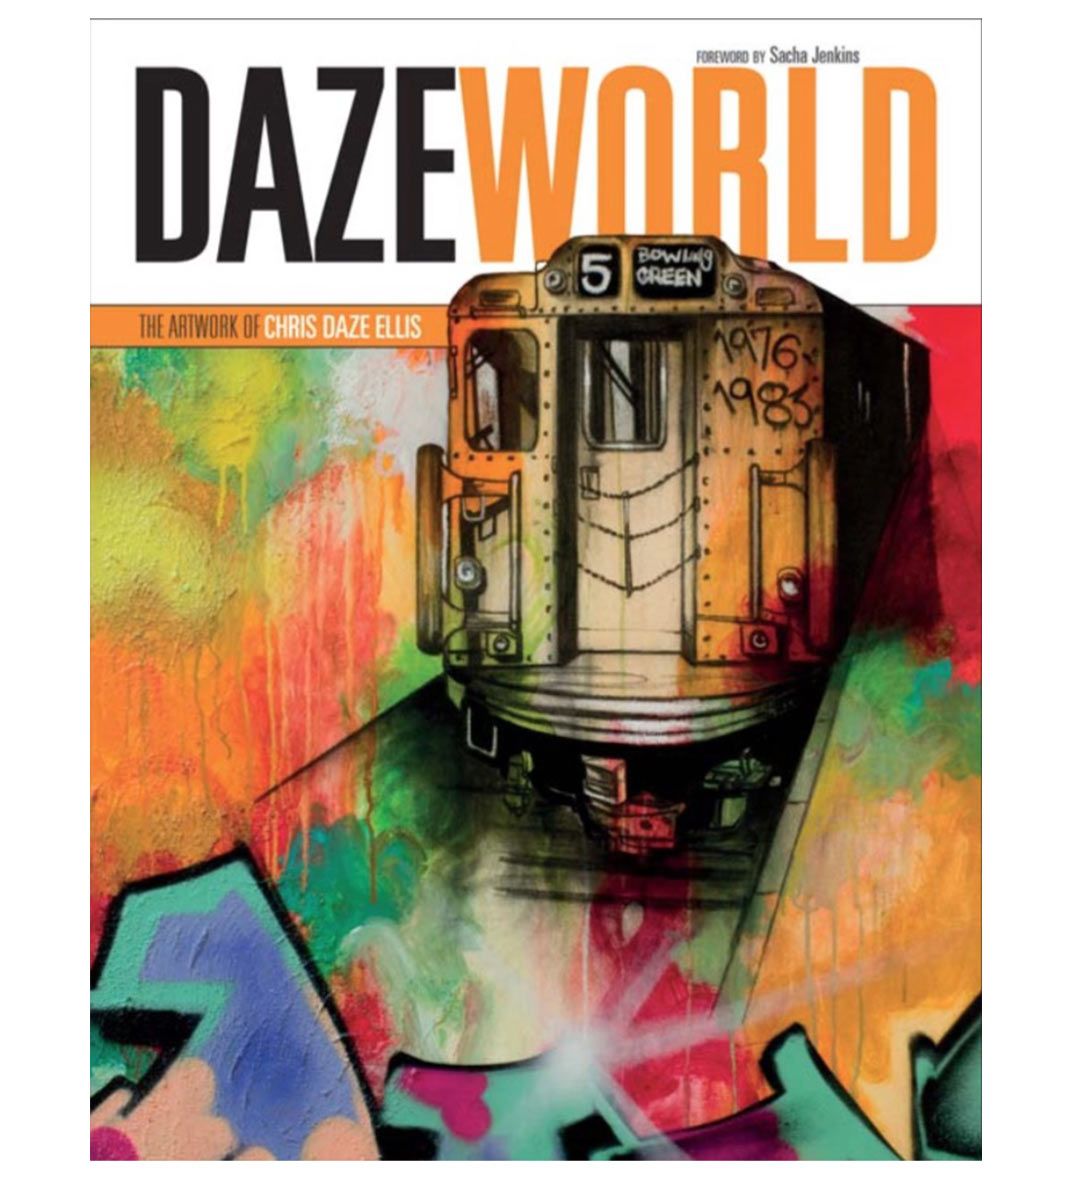 Dazeworld : The Artwork of Chris Daze Ellis